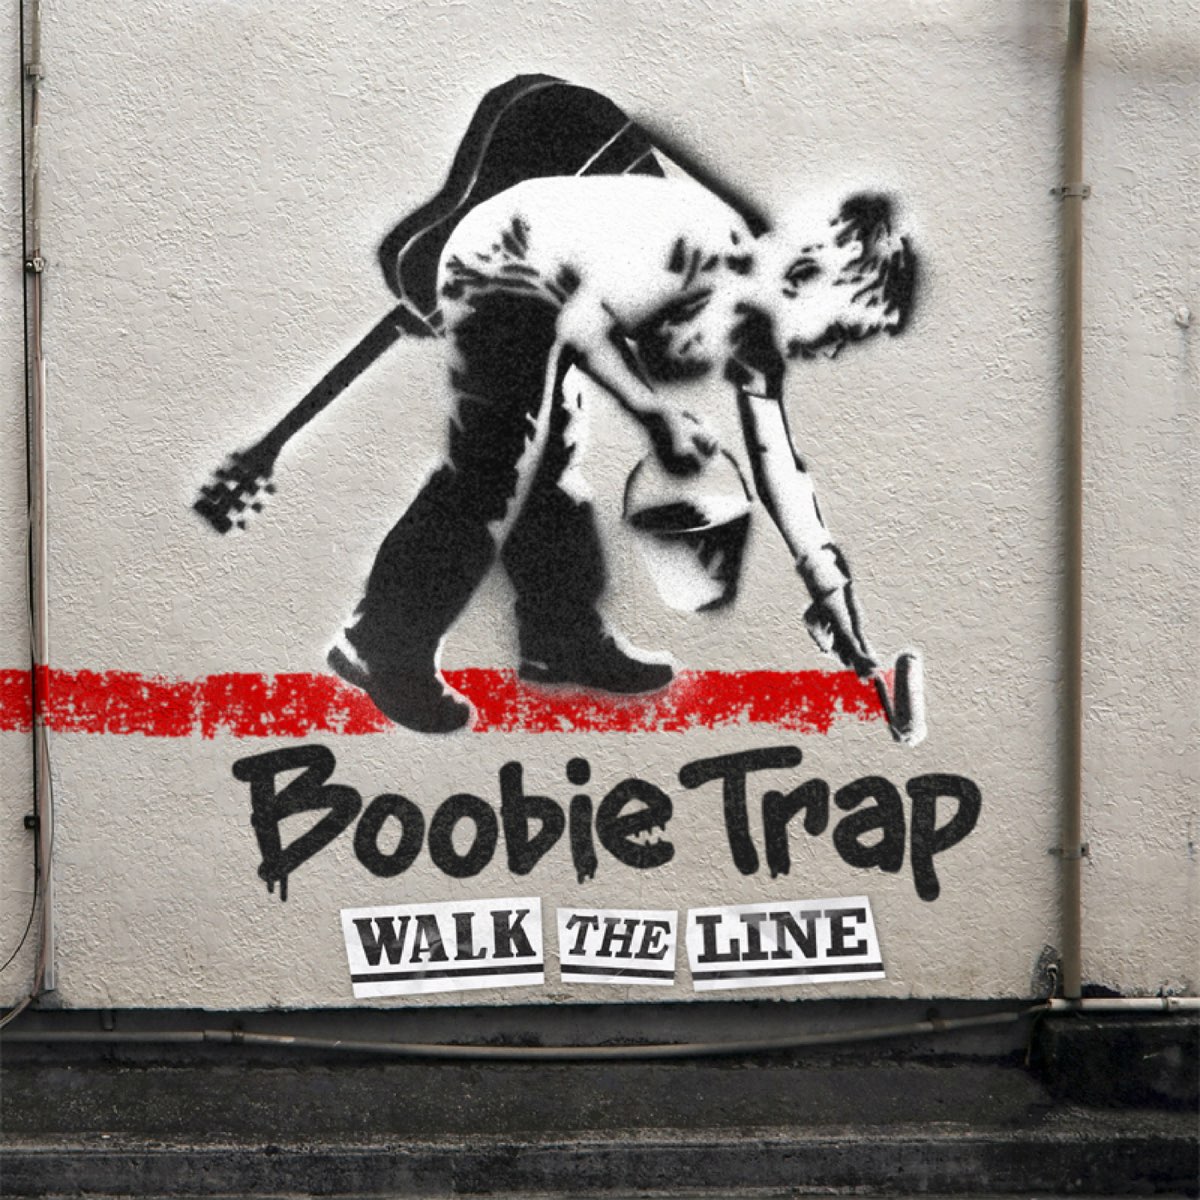 Booby Trap. Boobie - Boobie Trap (1993). Poobie is coming. Boobie trap